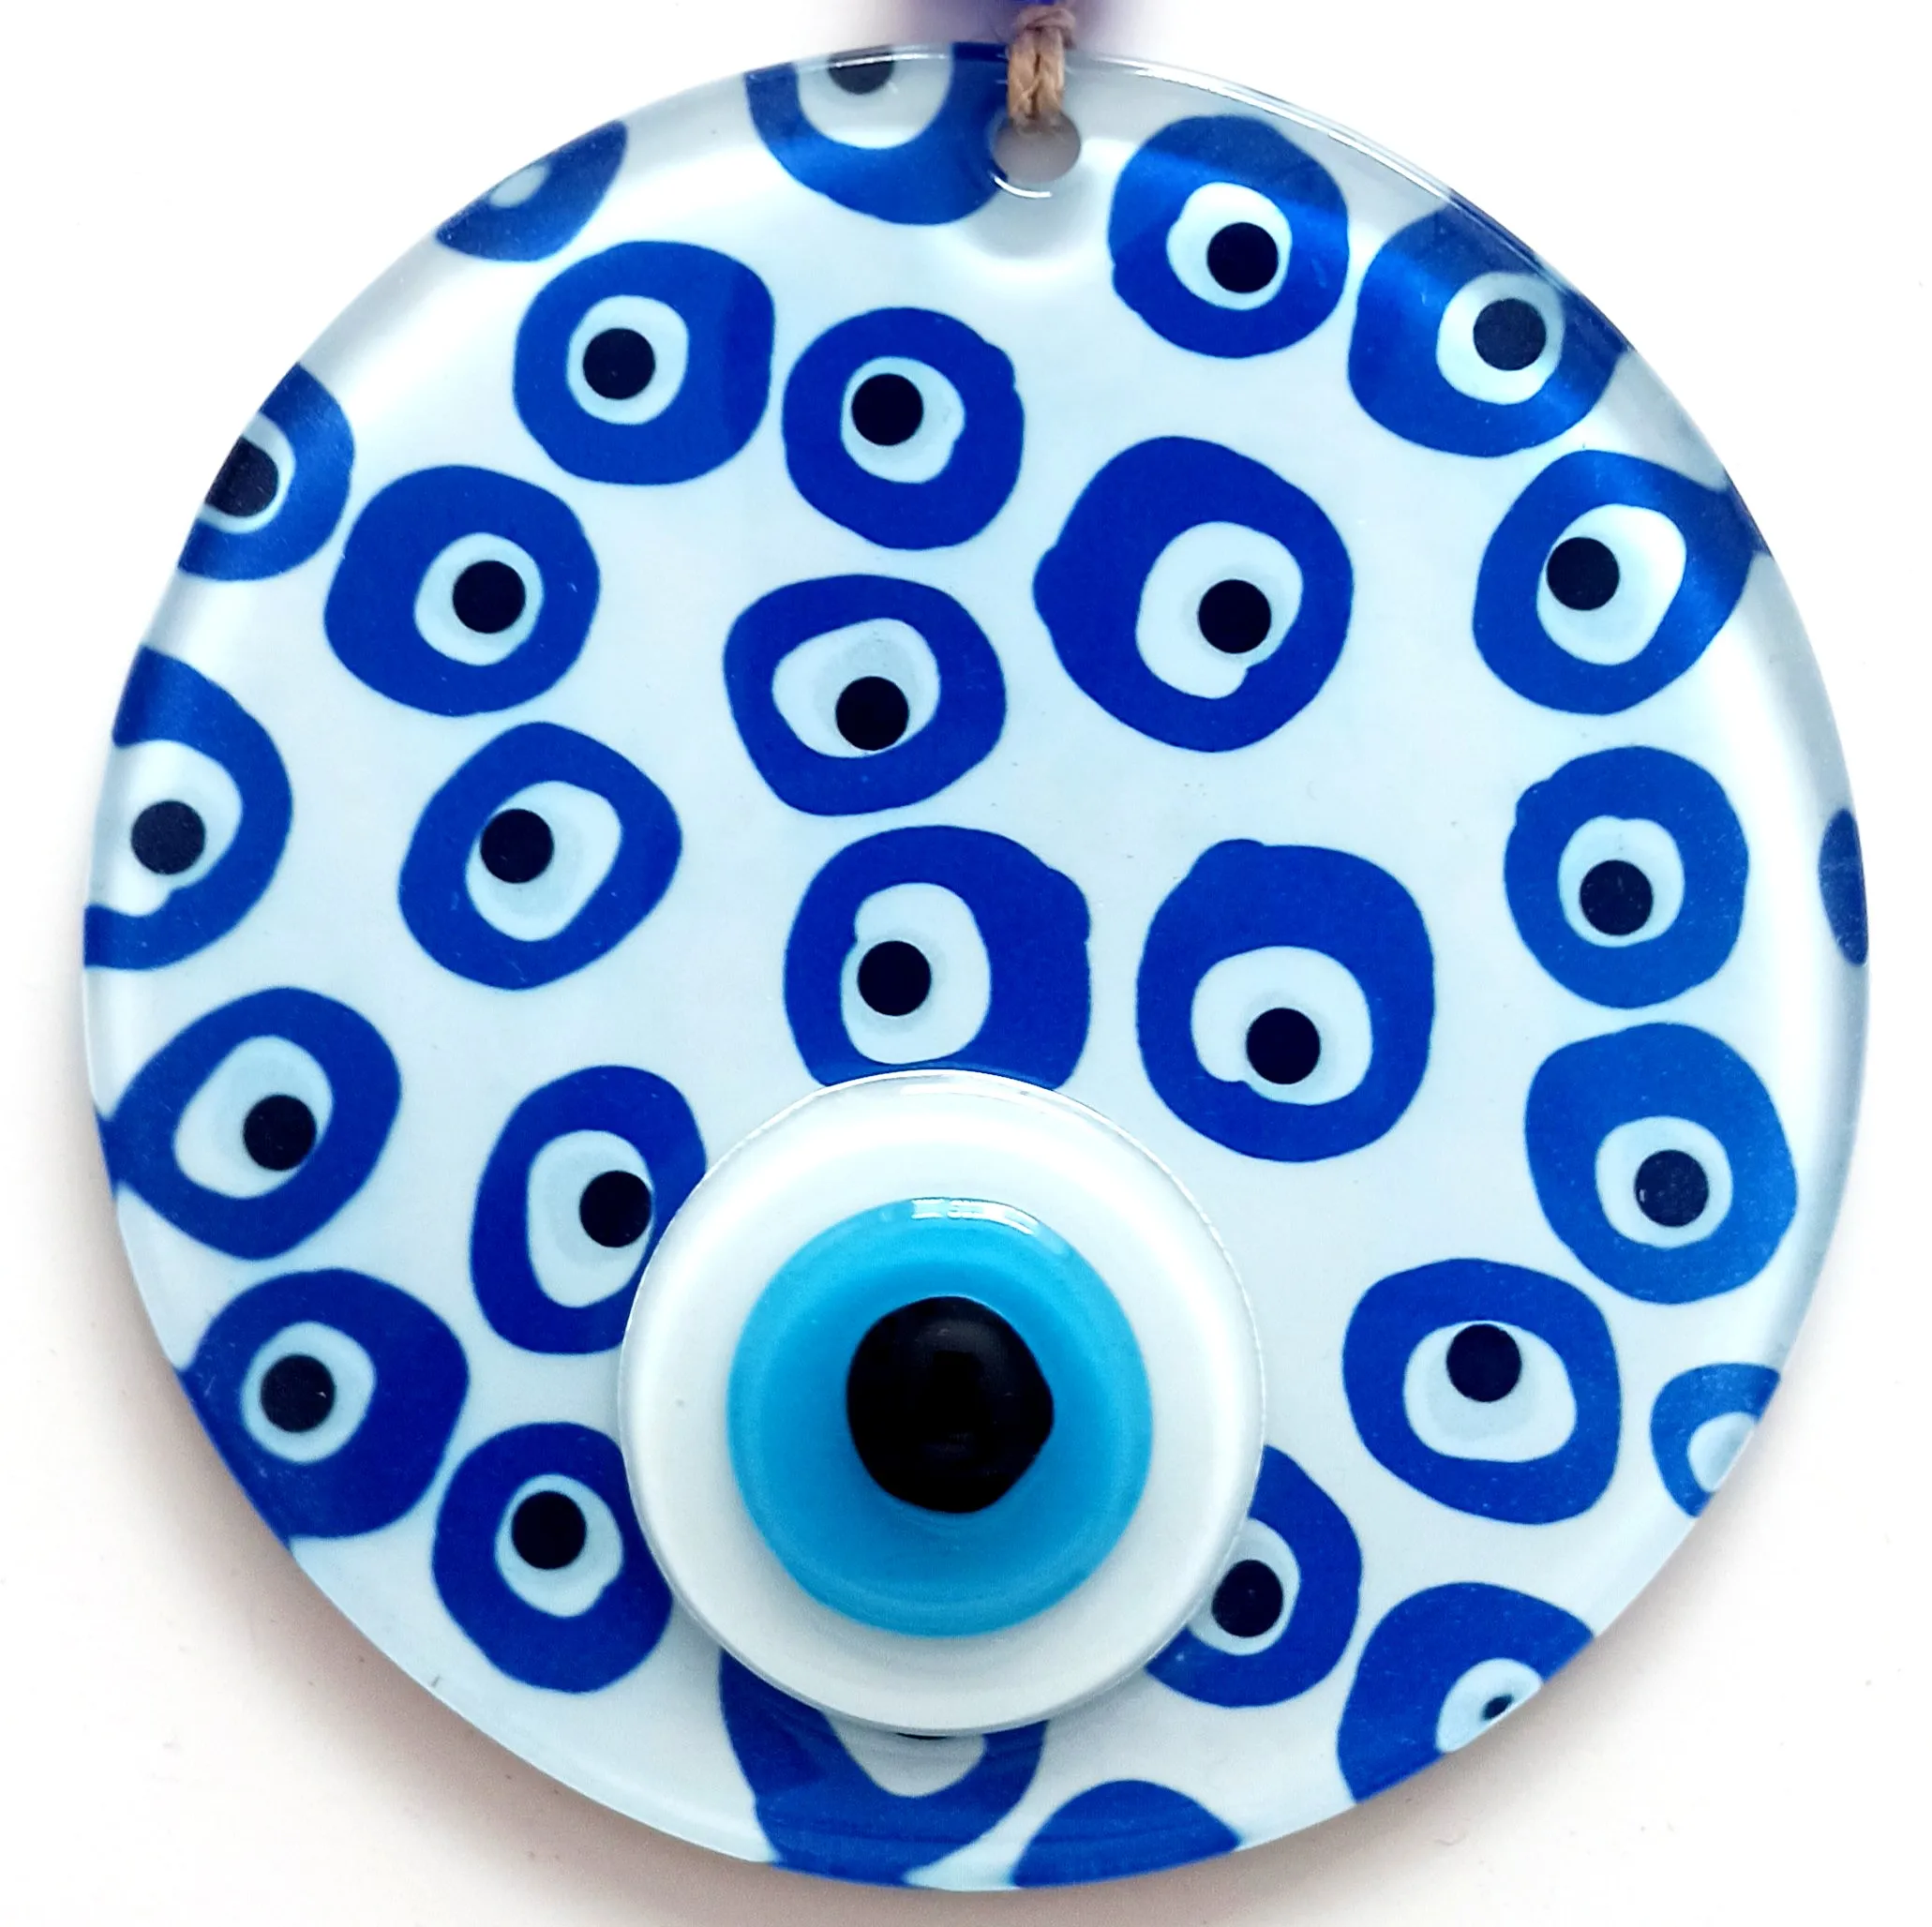 

Blue Evil Eye Bead Pattern Fusion Glass Wall Decor